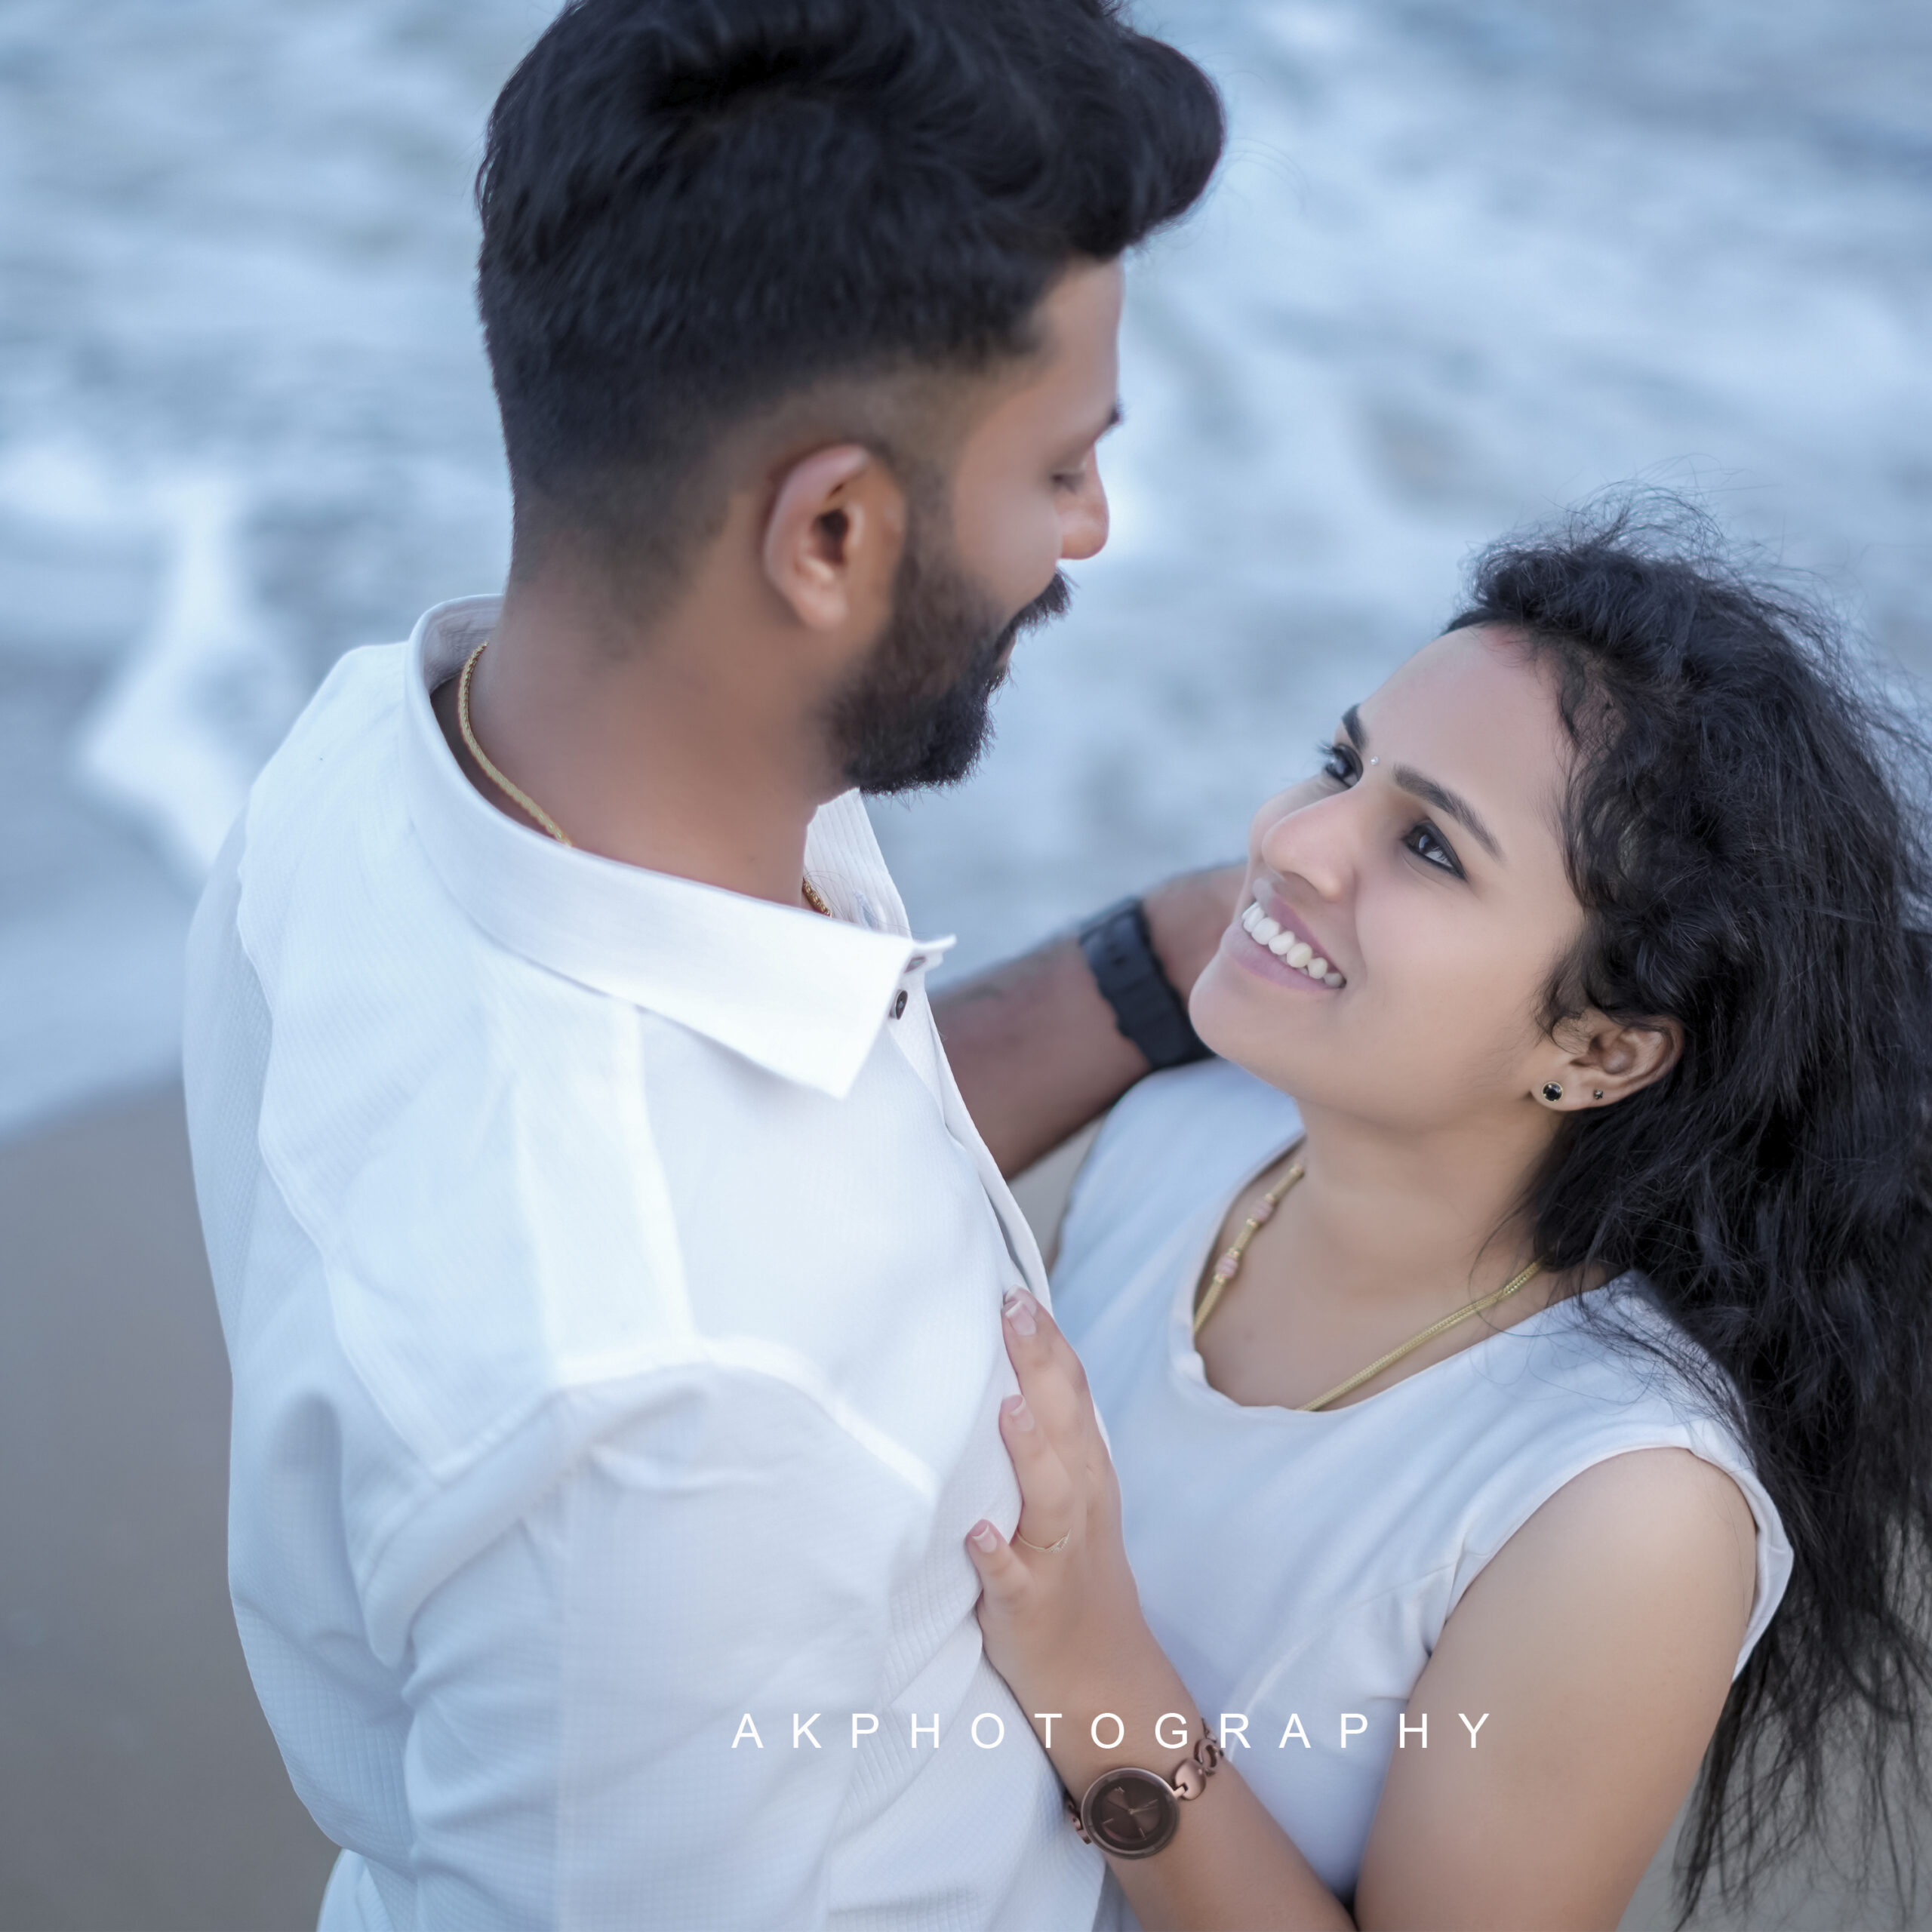 AK Photography: Bangalore's Premier Post-Wedding Photographers | Capture Your Love Story